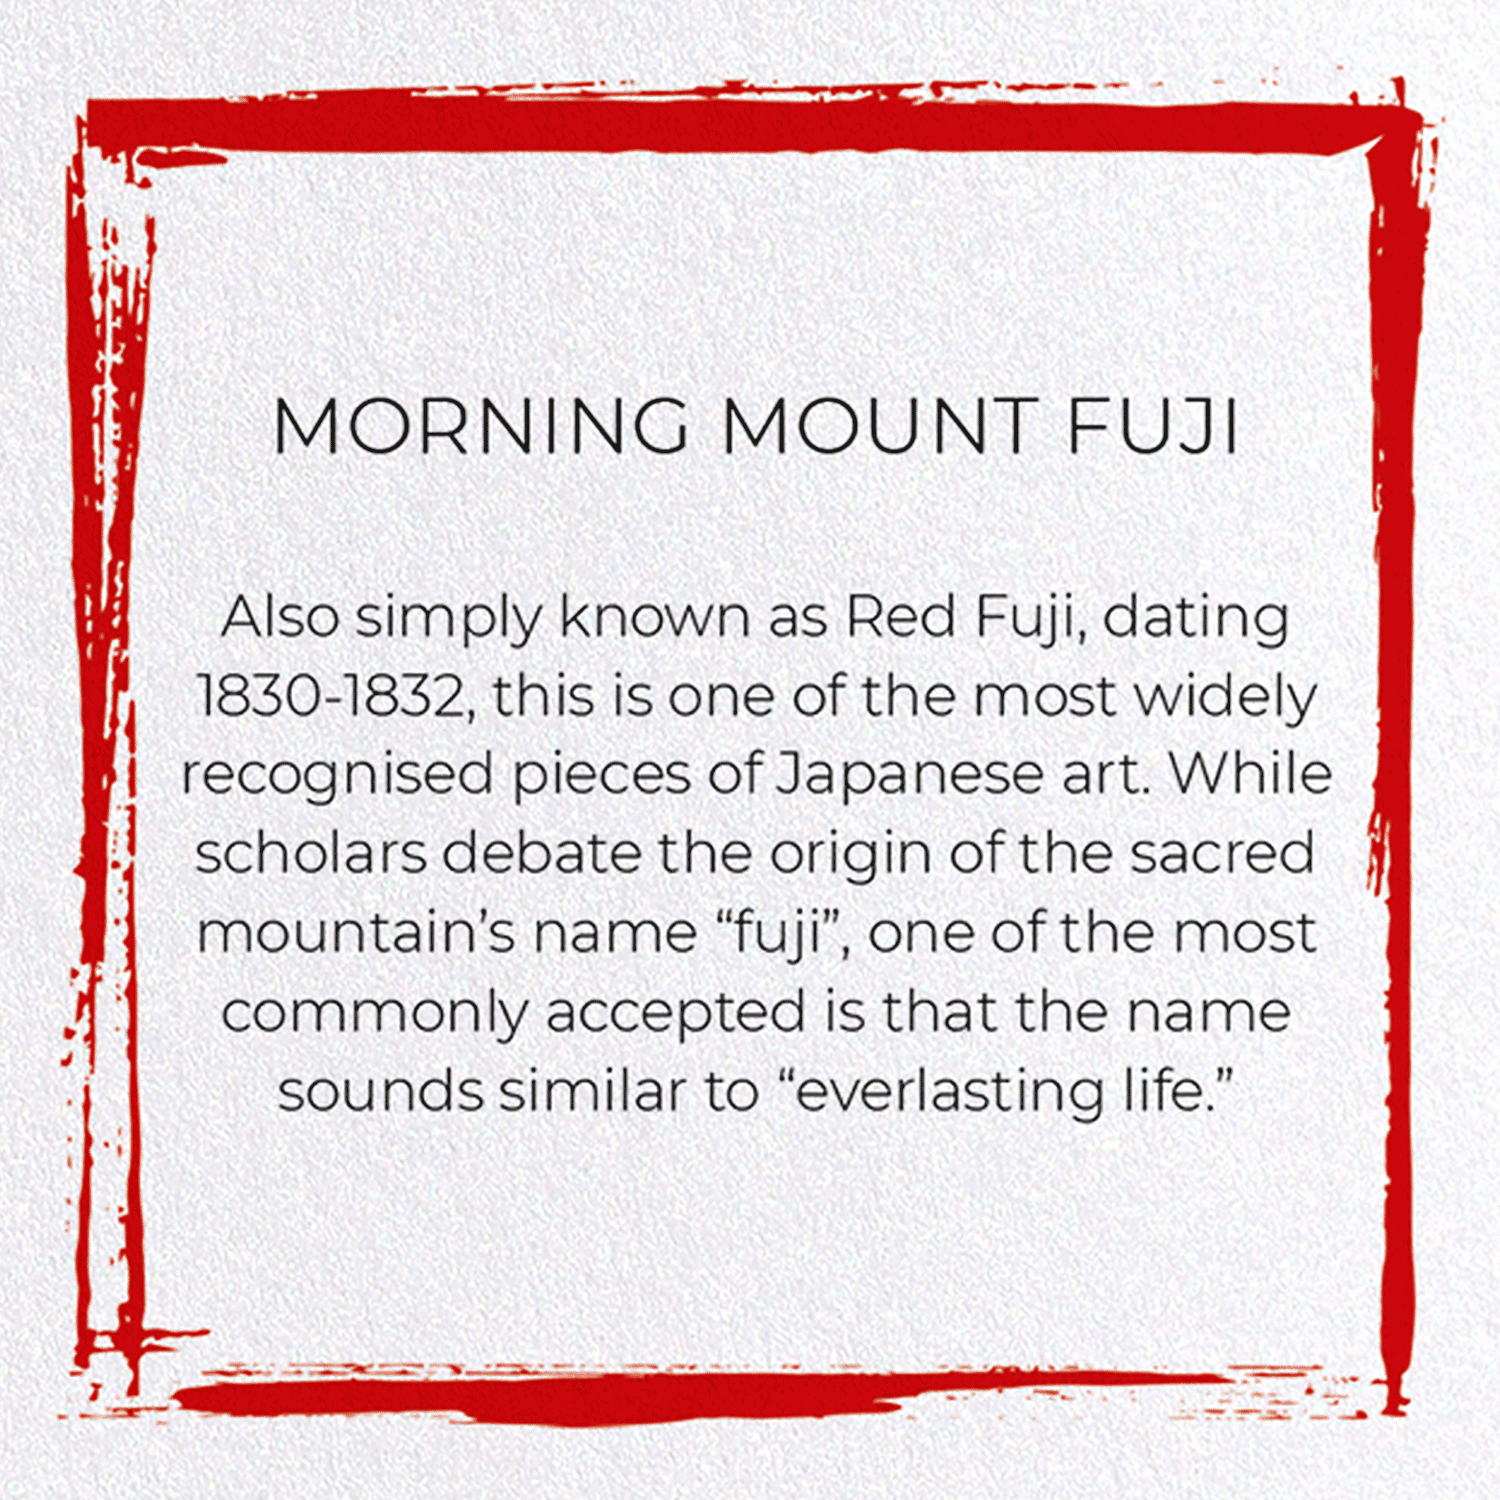 MORNING MOUNT FUJI